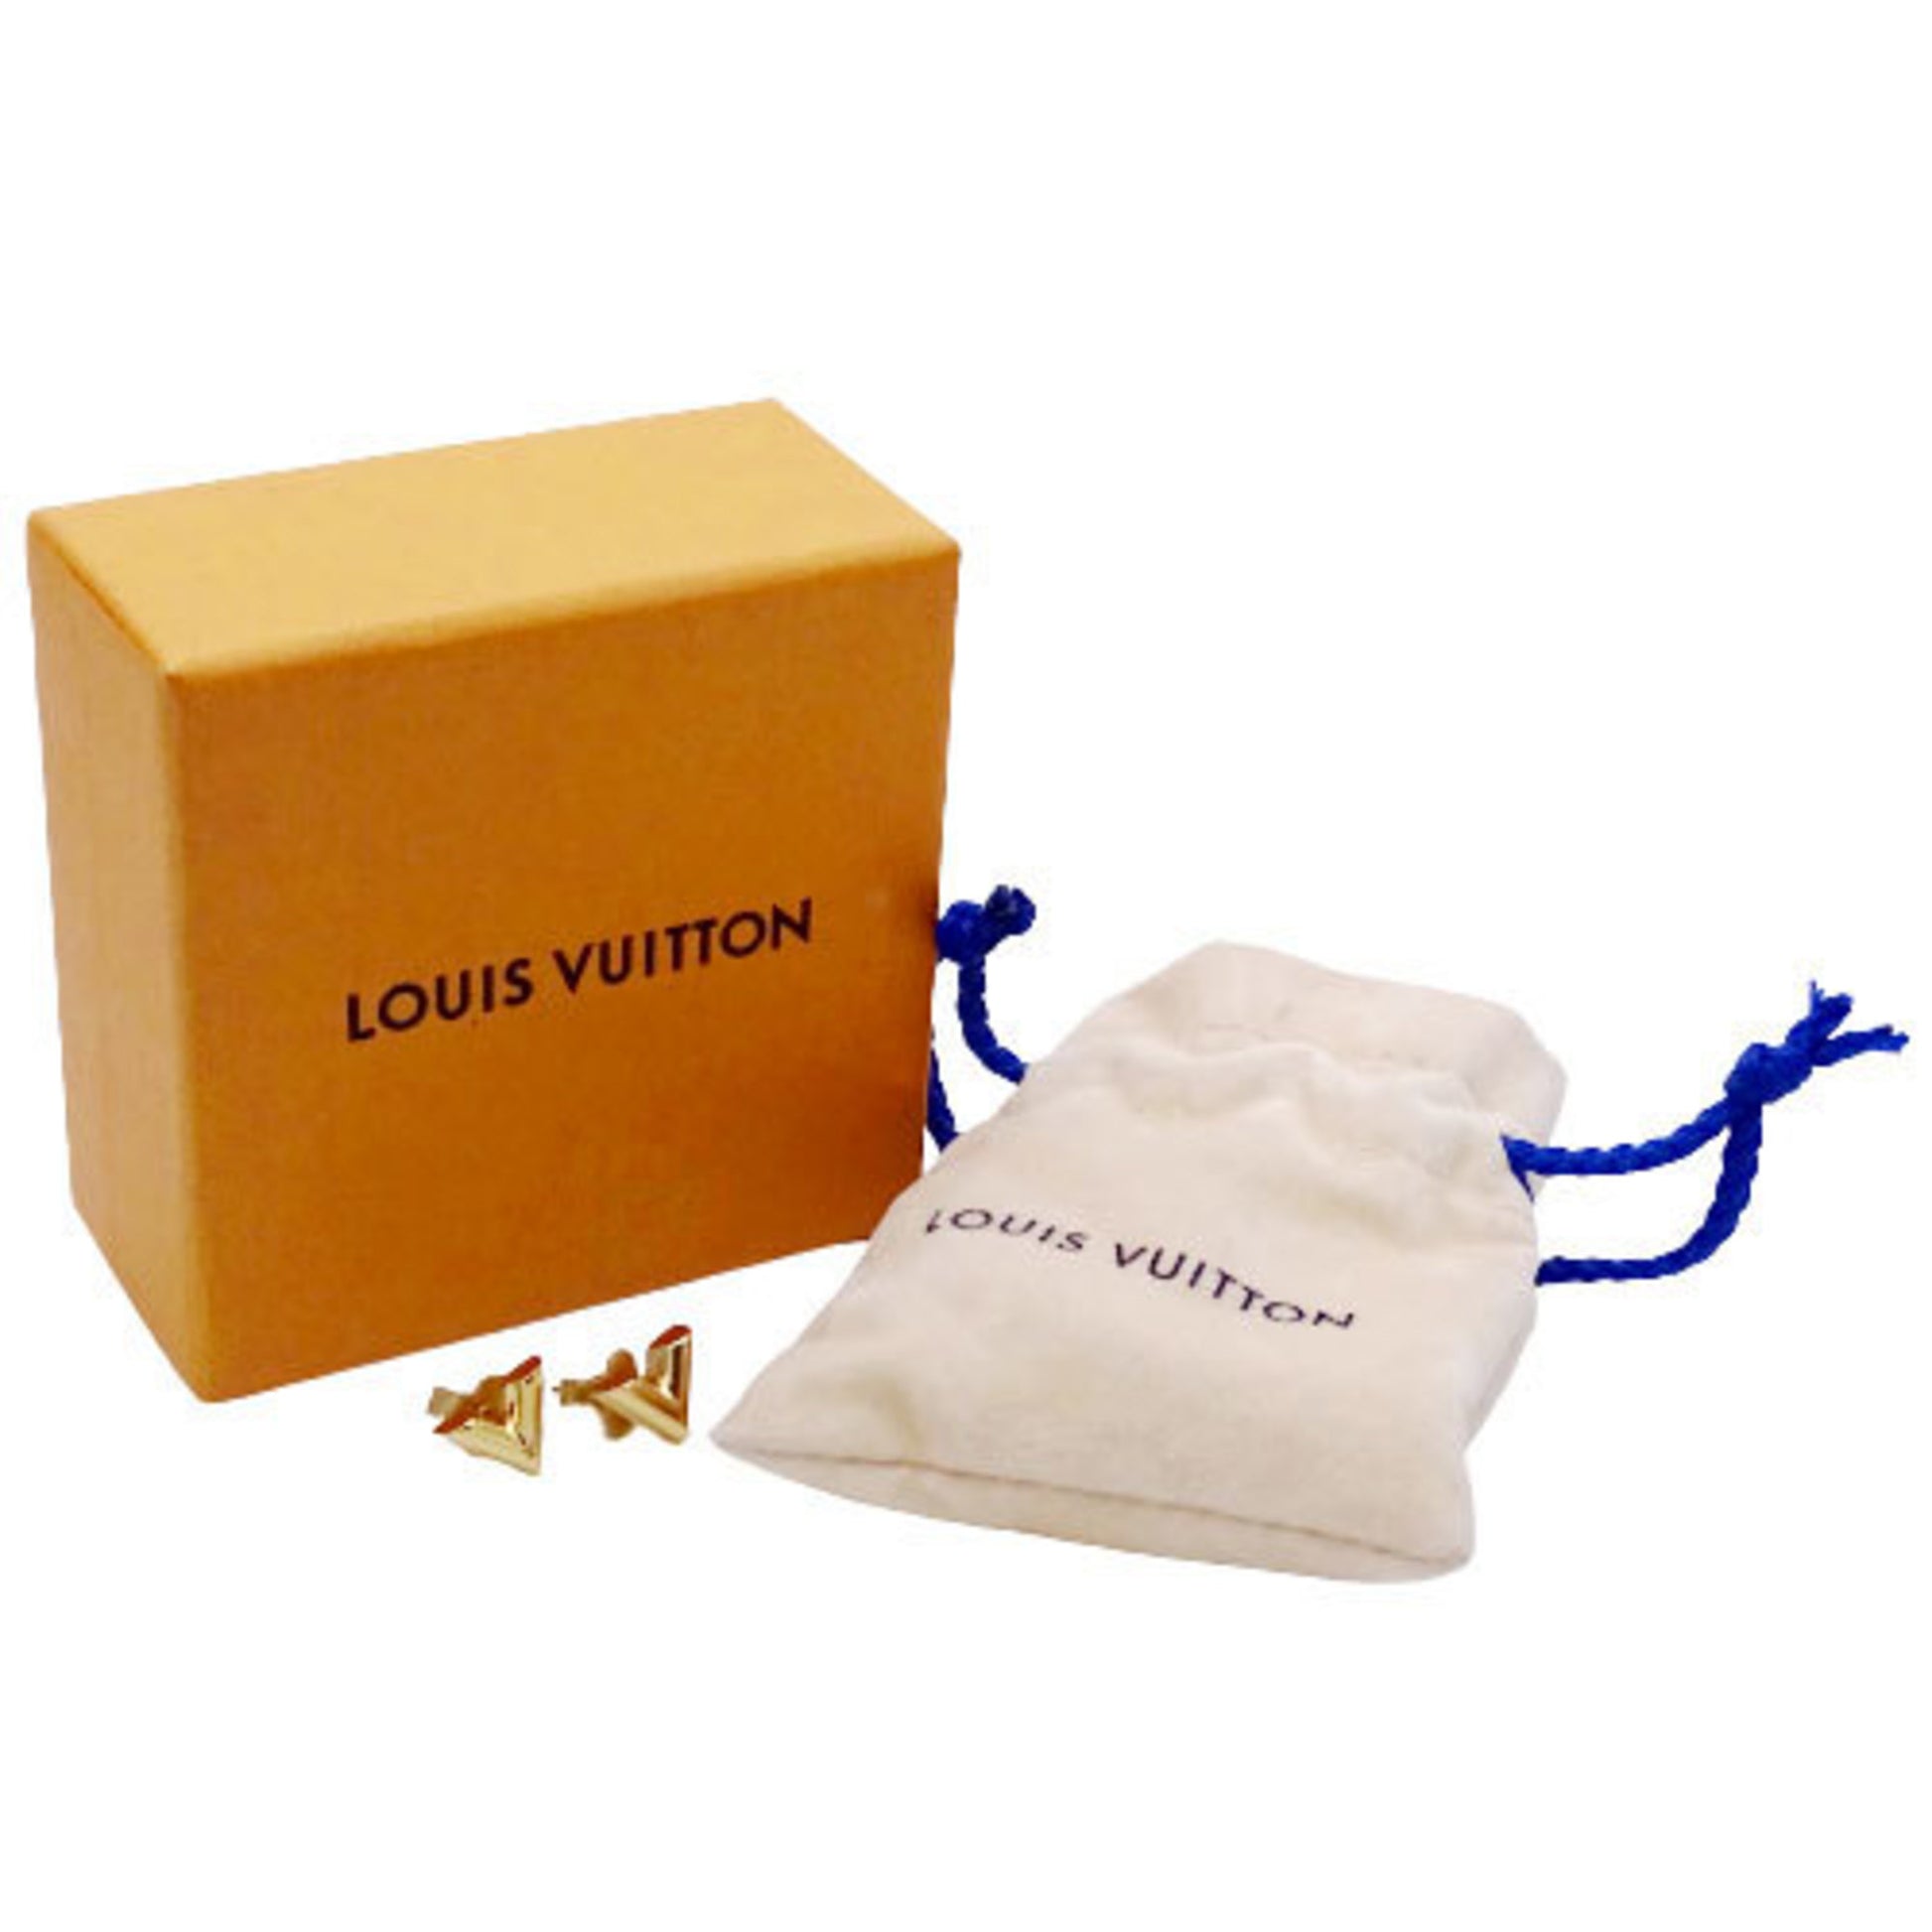 Shop Louis Vuitton Essential v stud earrings (M68153, M63208) by BabyYuu